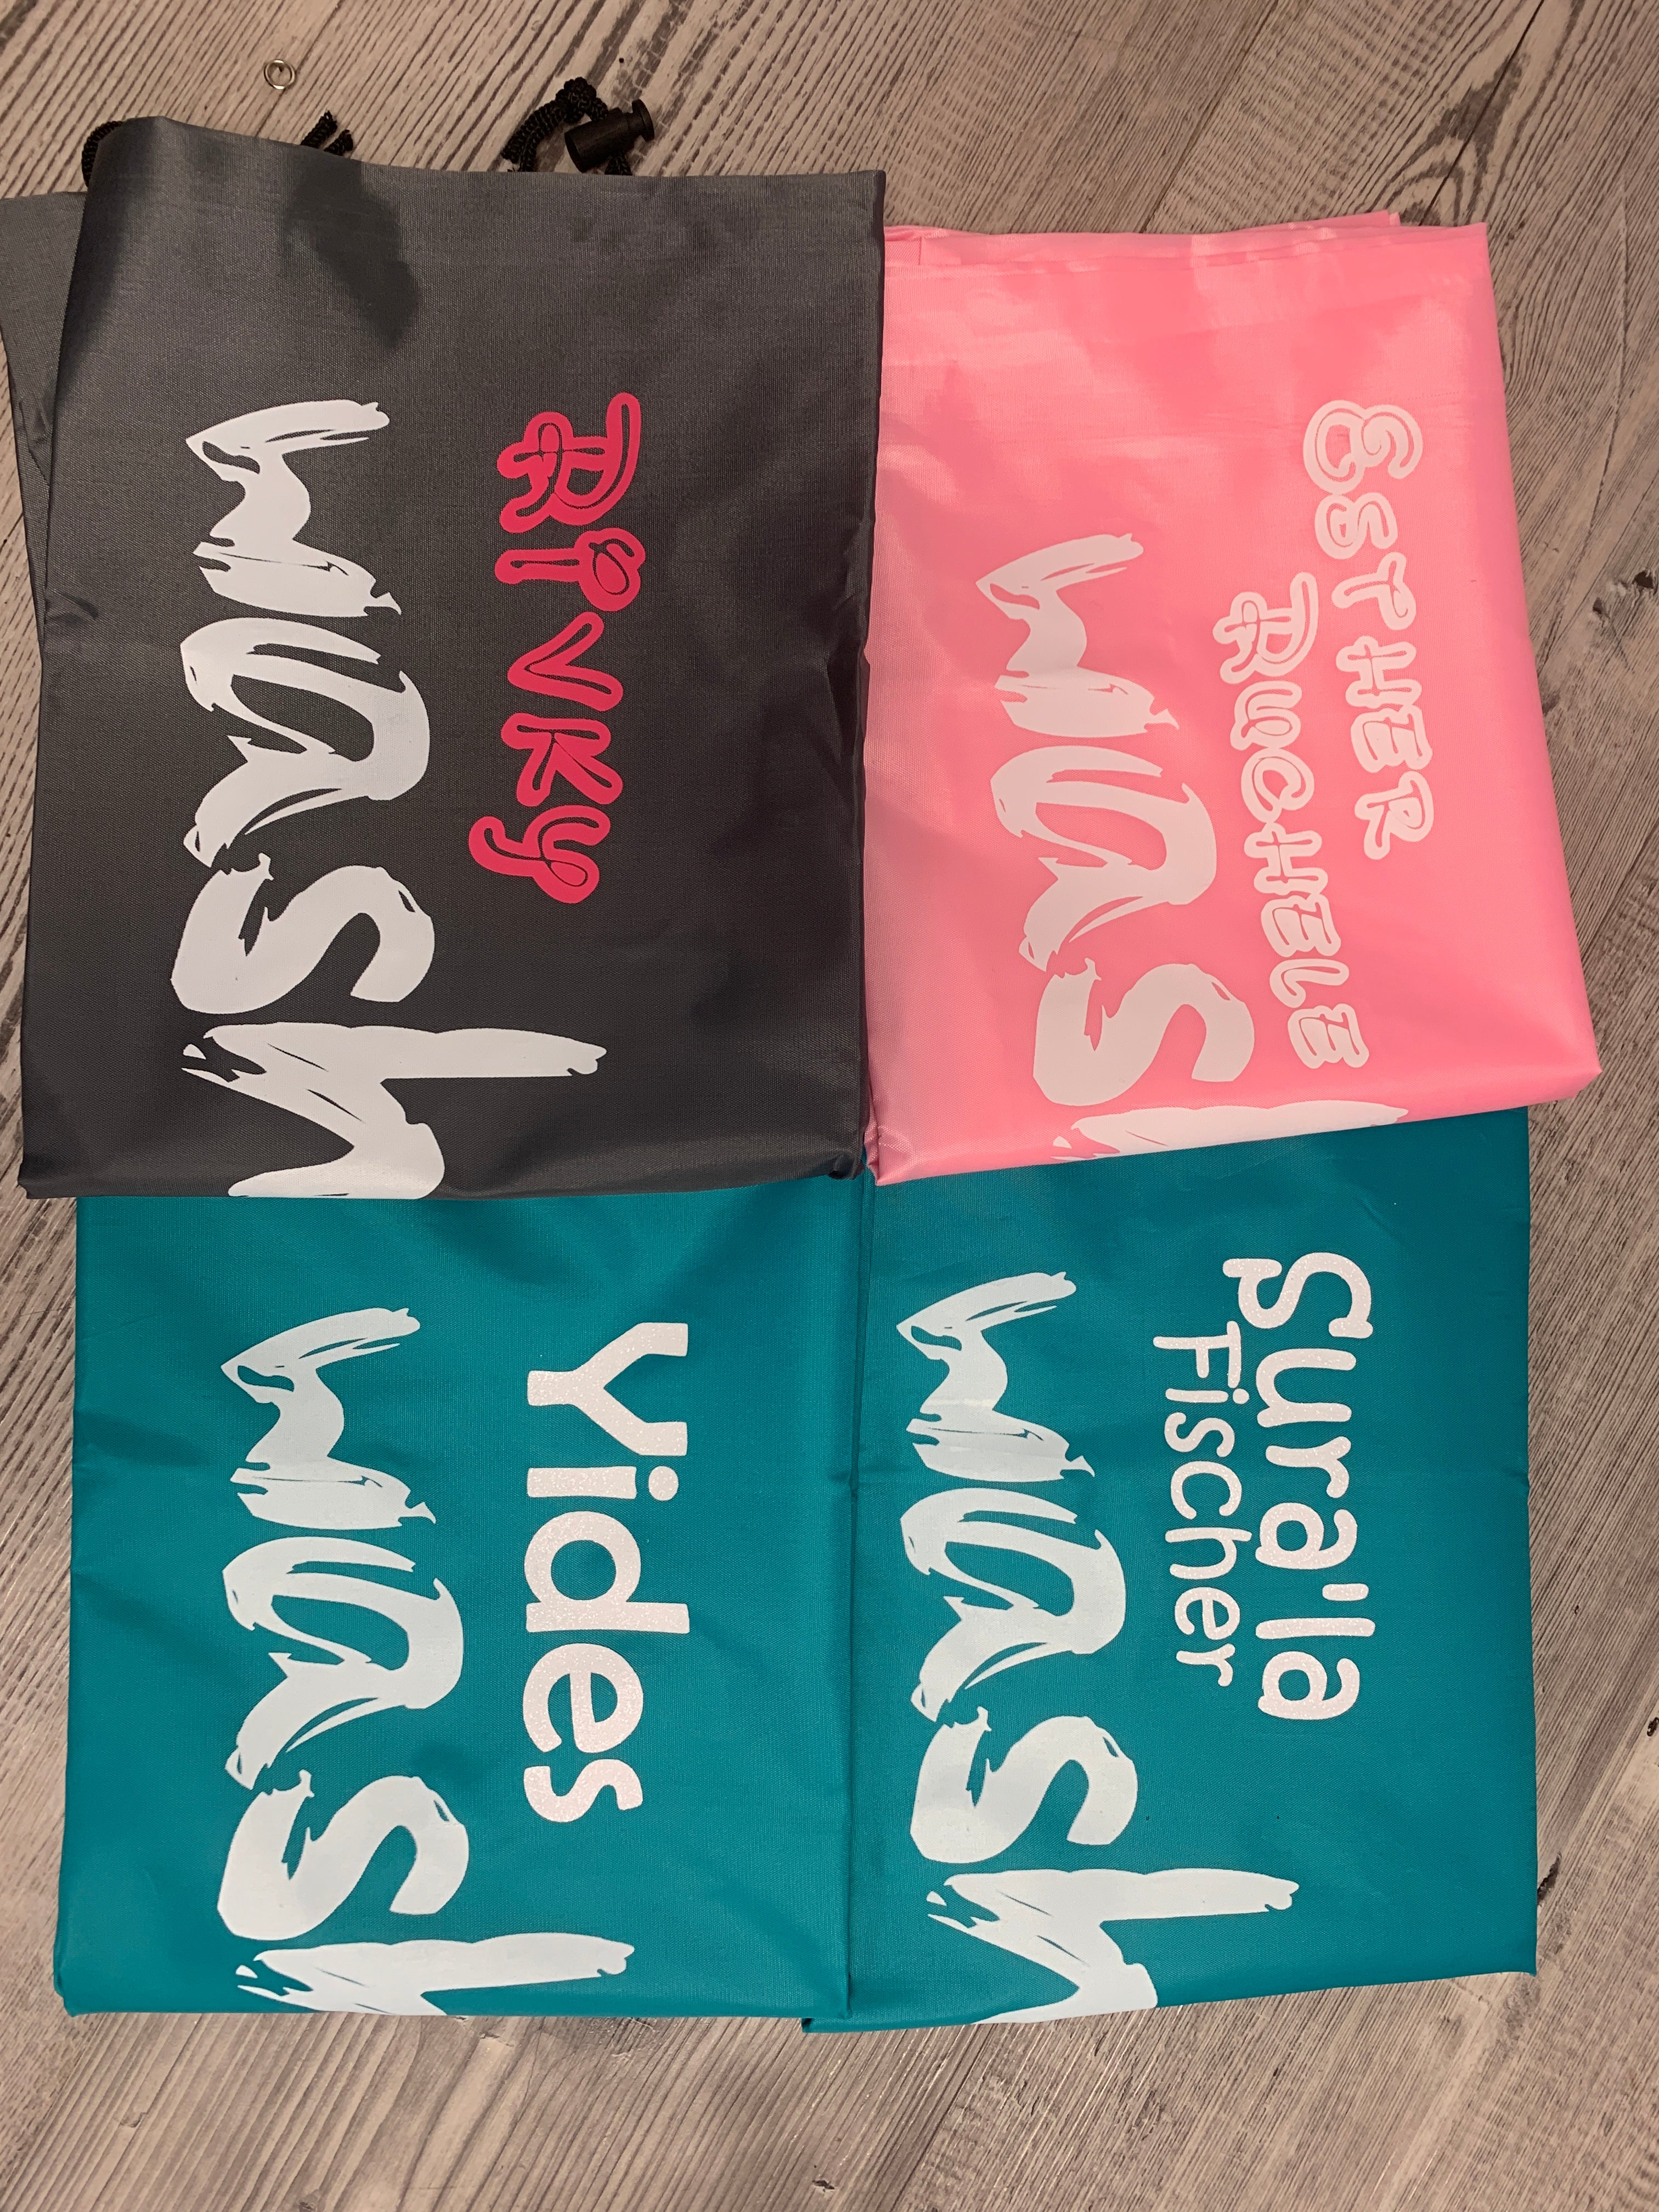 Camp Summer Laundry Bag adorable "Wash Me" design 3 colors girl/boy